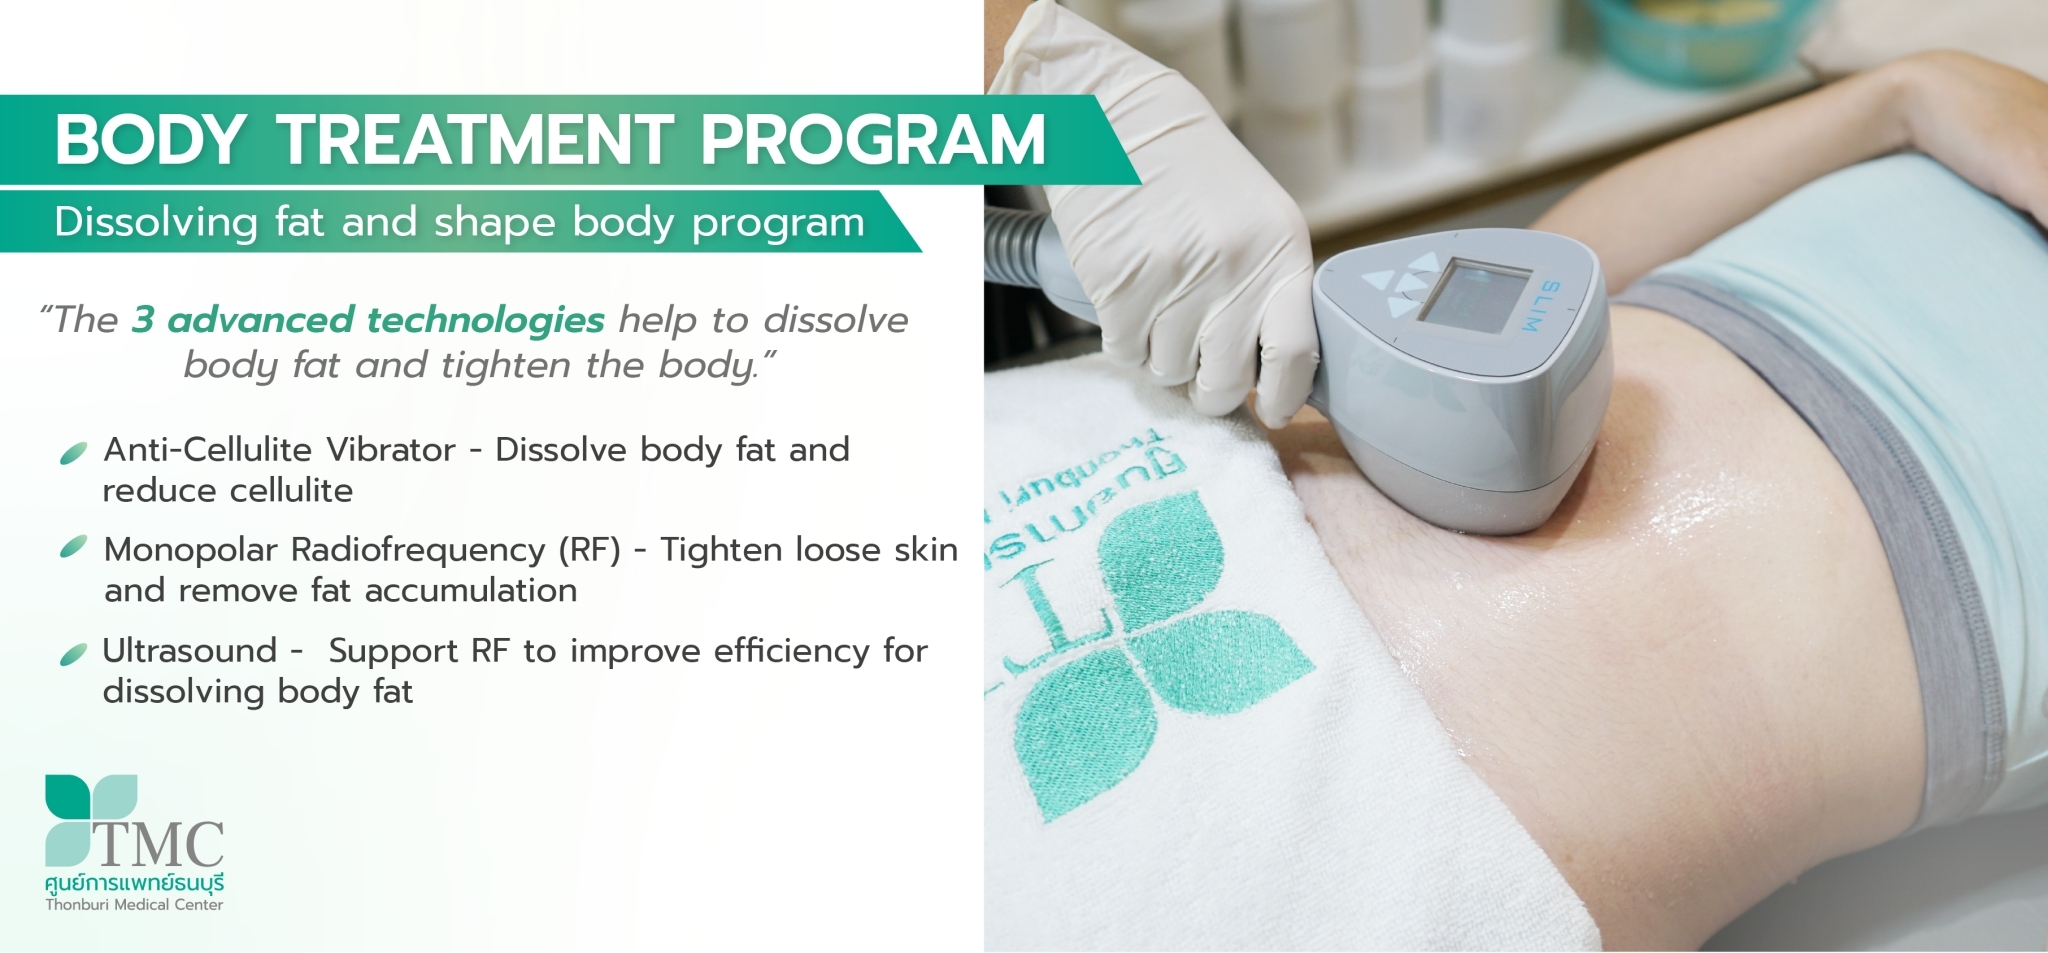 Body Treatment Program